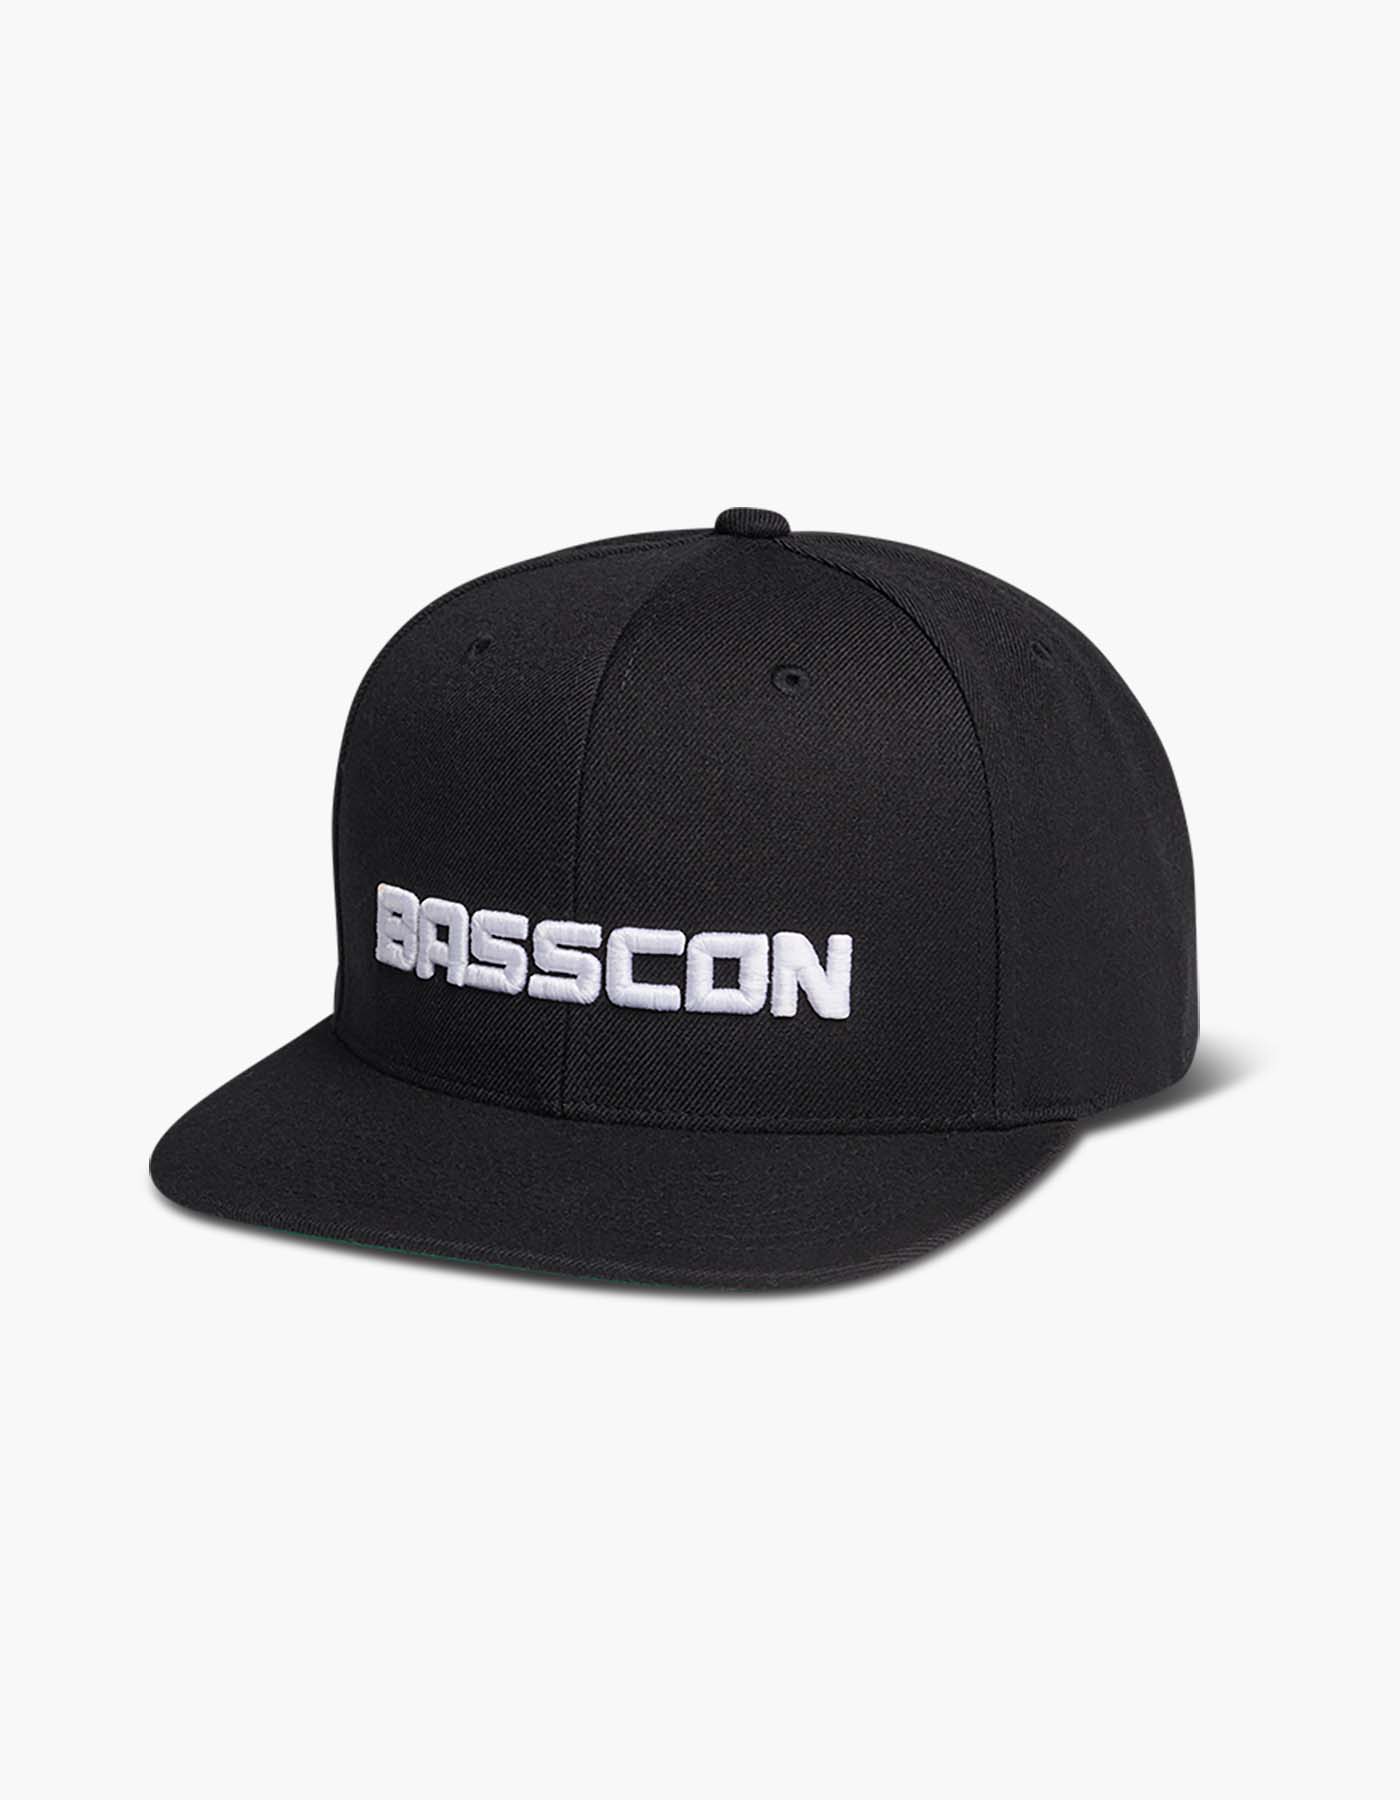 Basscon Logo Snapback